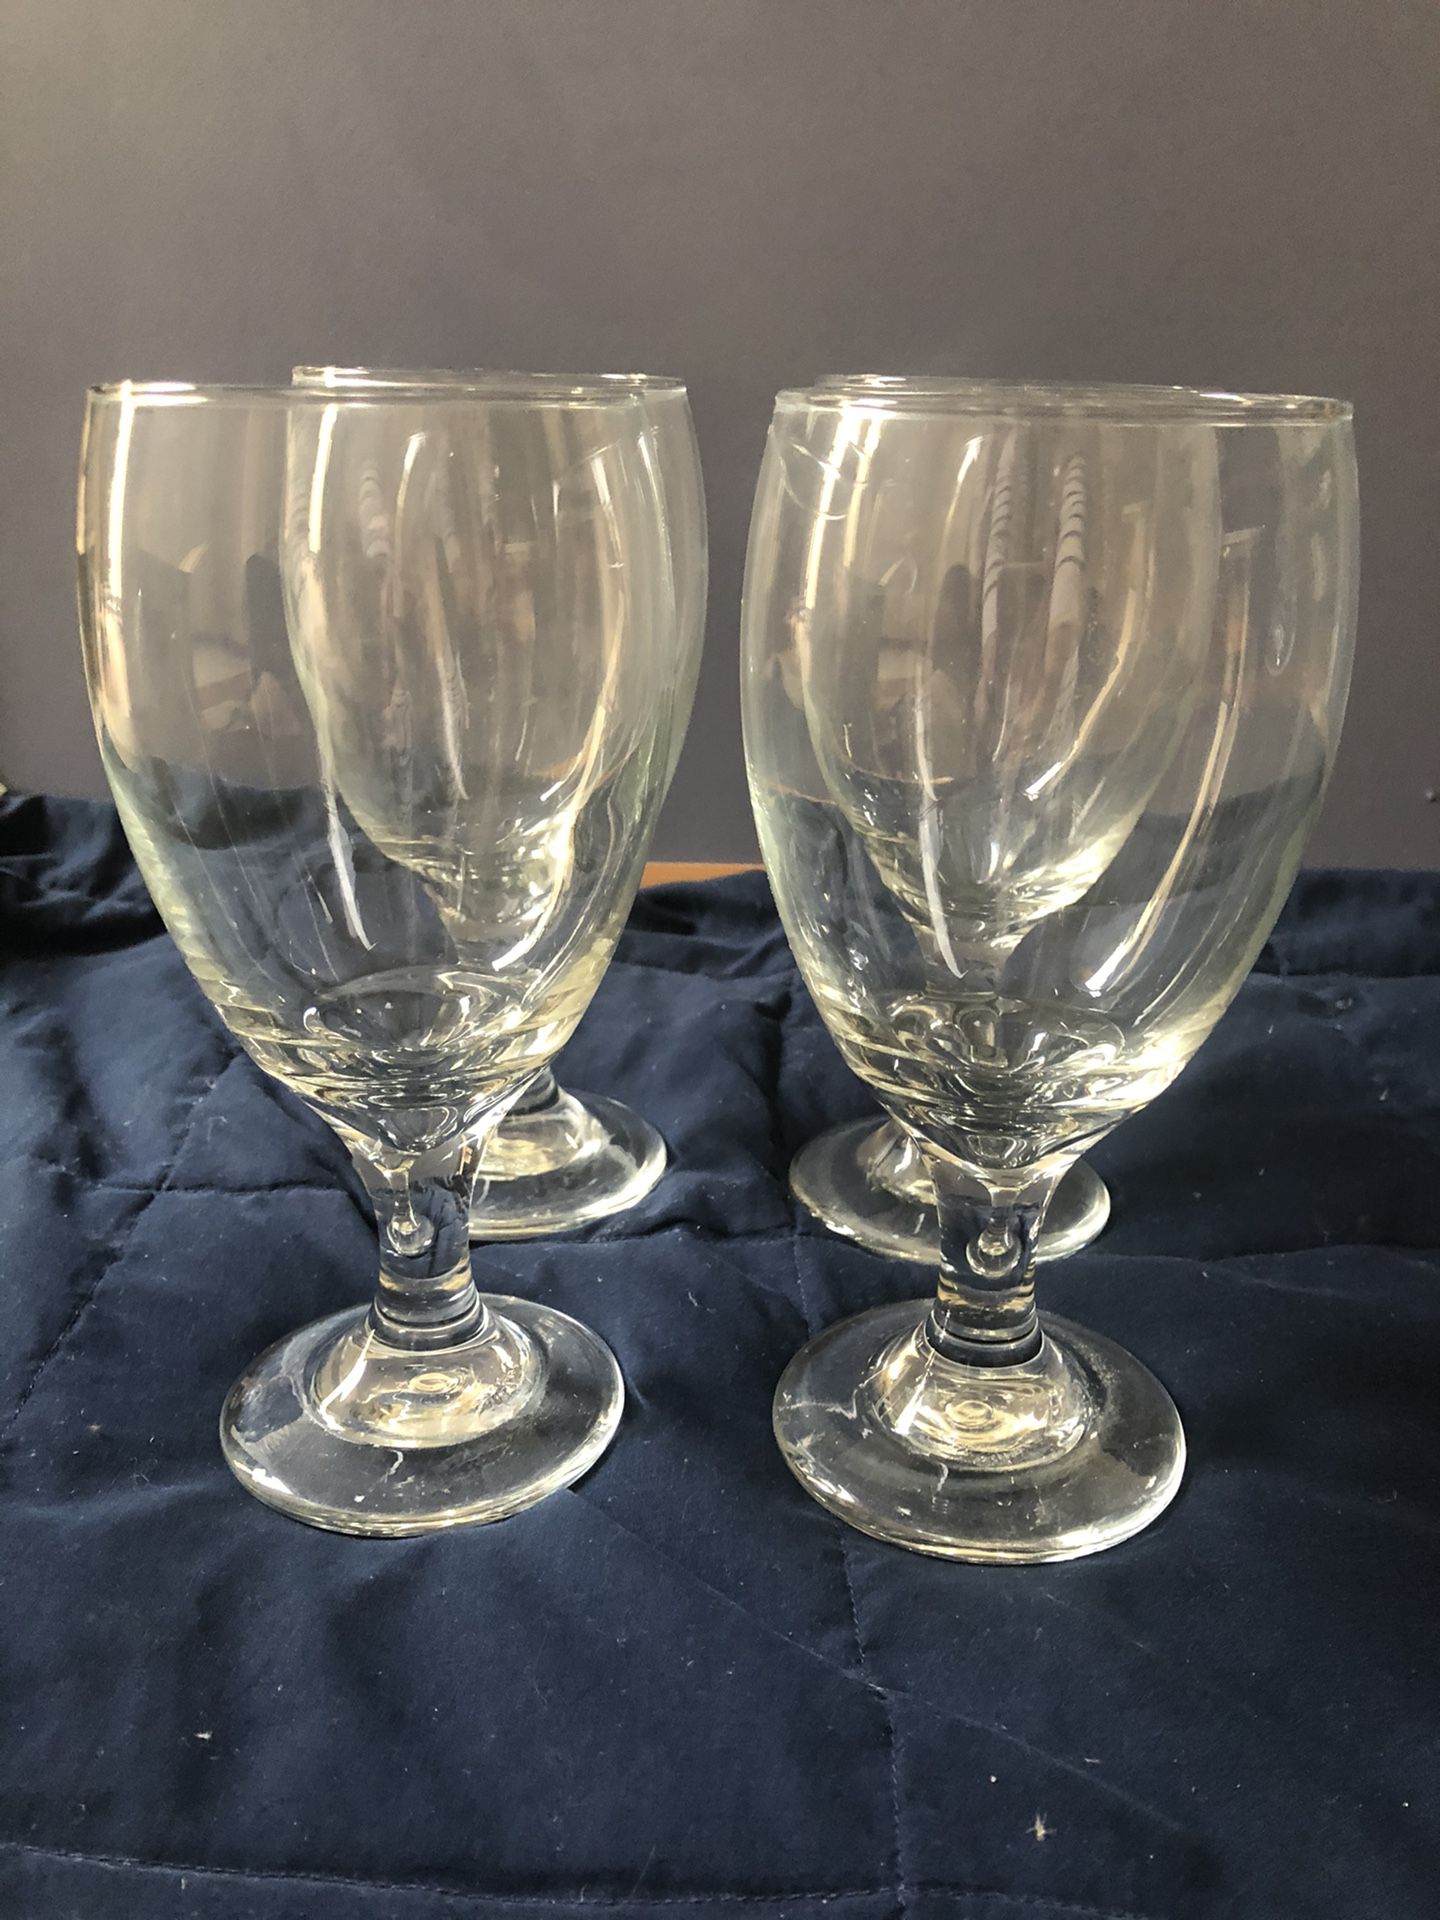 Set of 4 glasses, goblet style